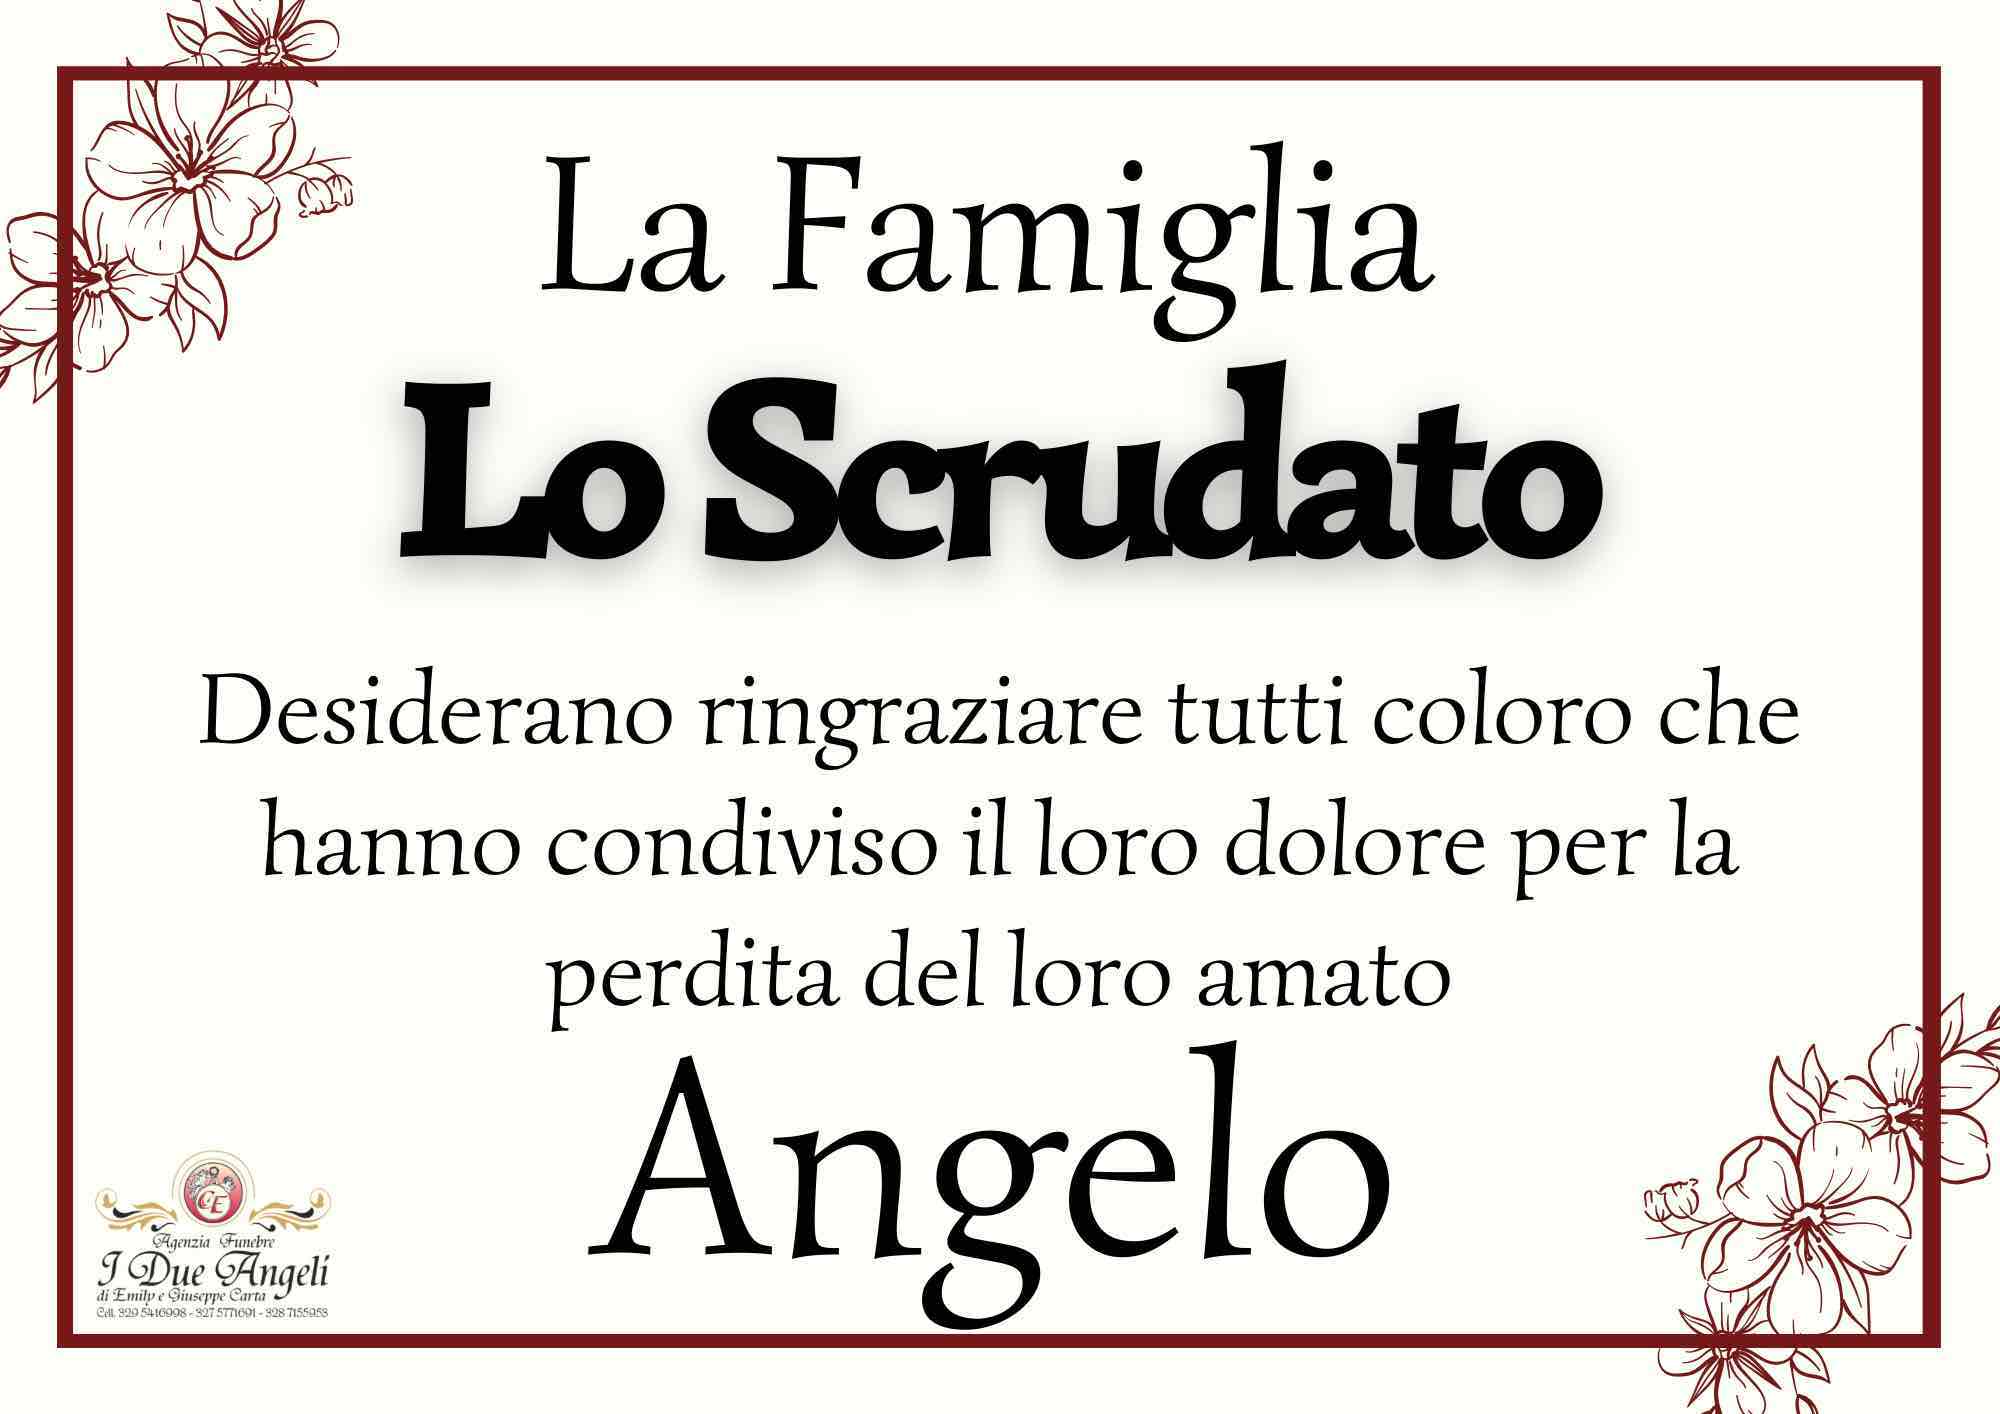 Angelo Lo Scrudato